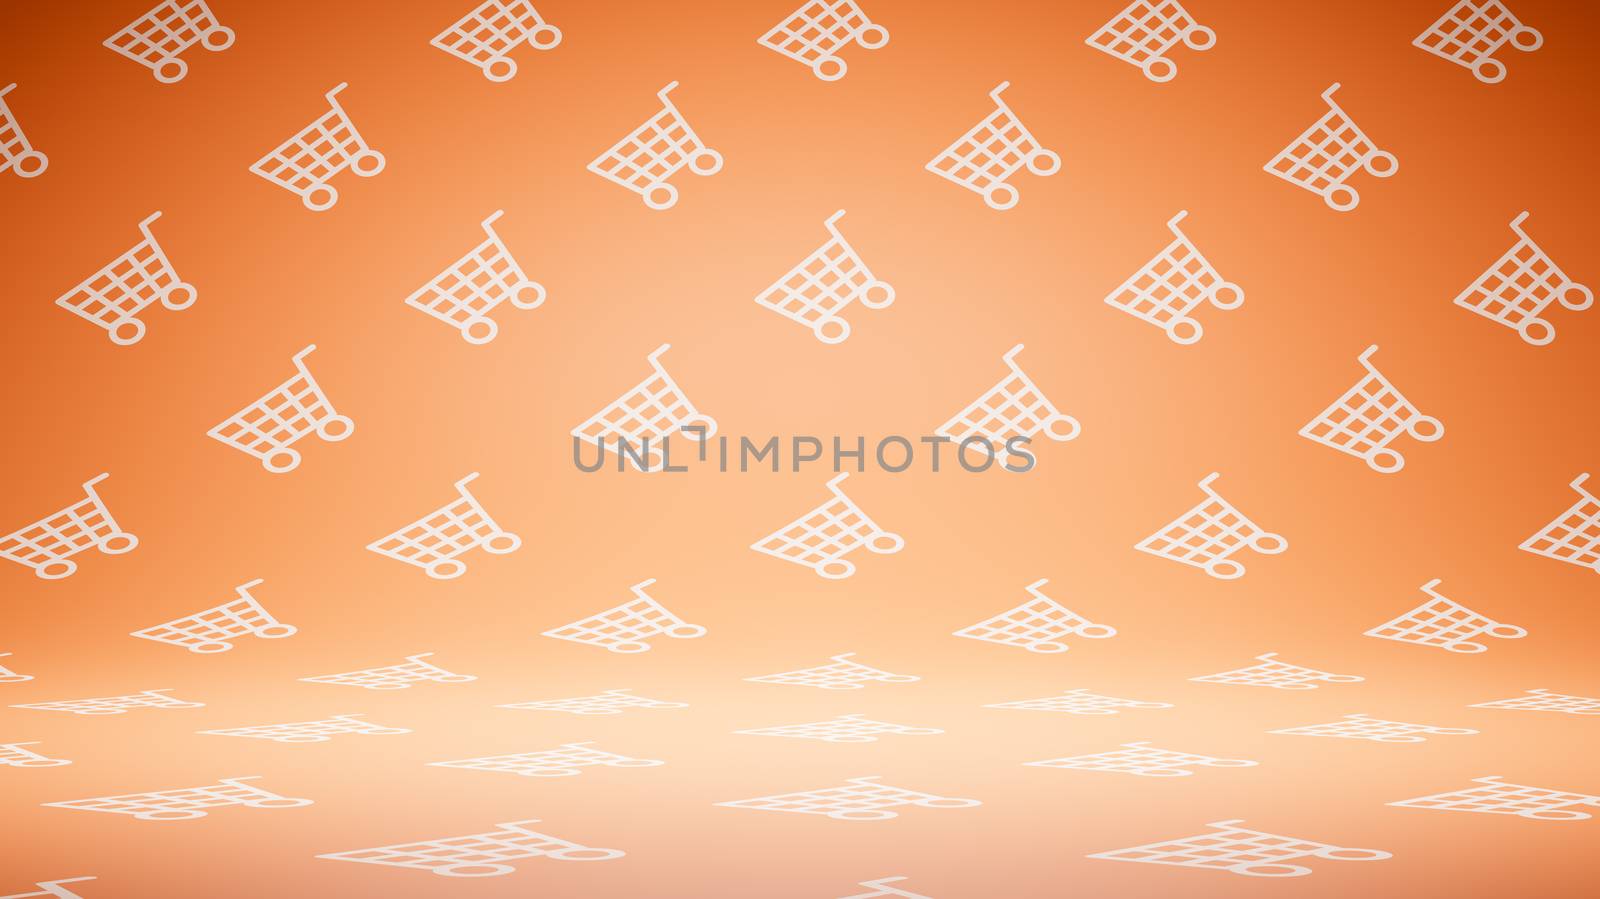 Empty Blank Orange and White Shopping Cart Shape Pattern Studio Background 3D Render Illustration